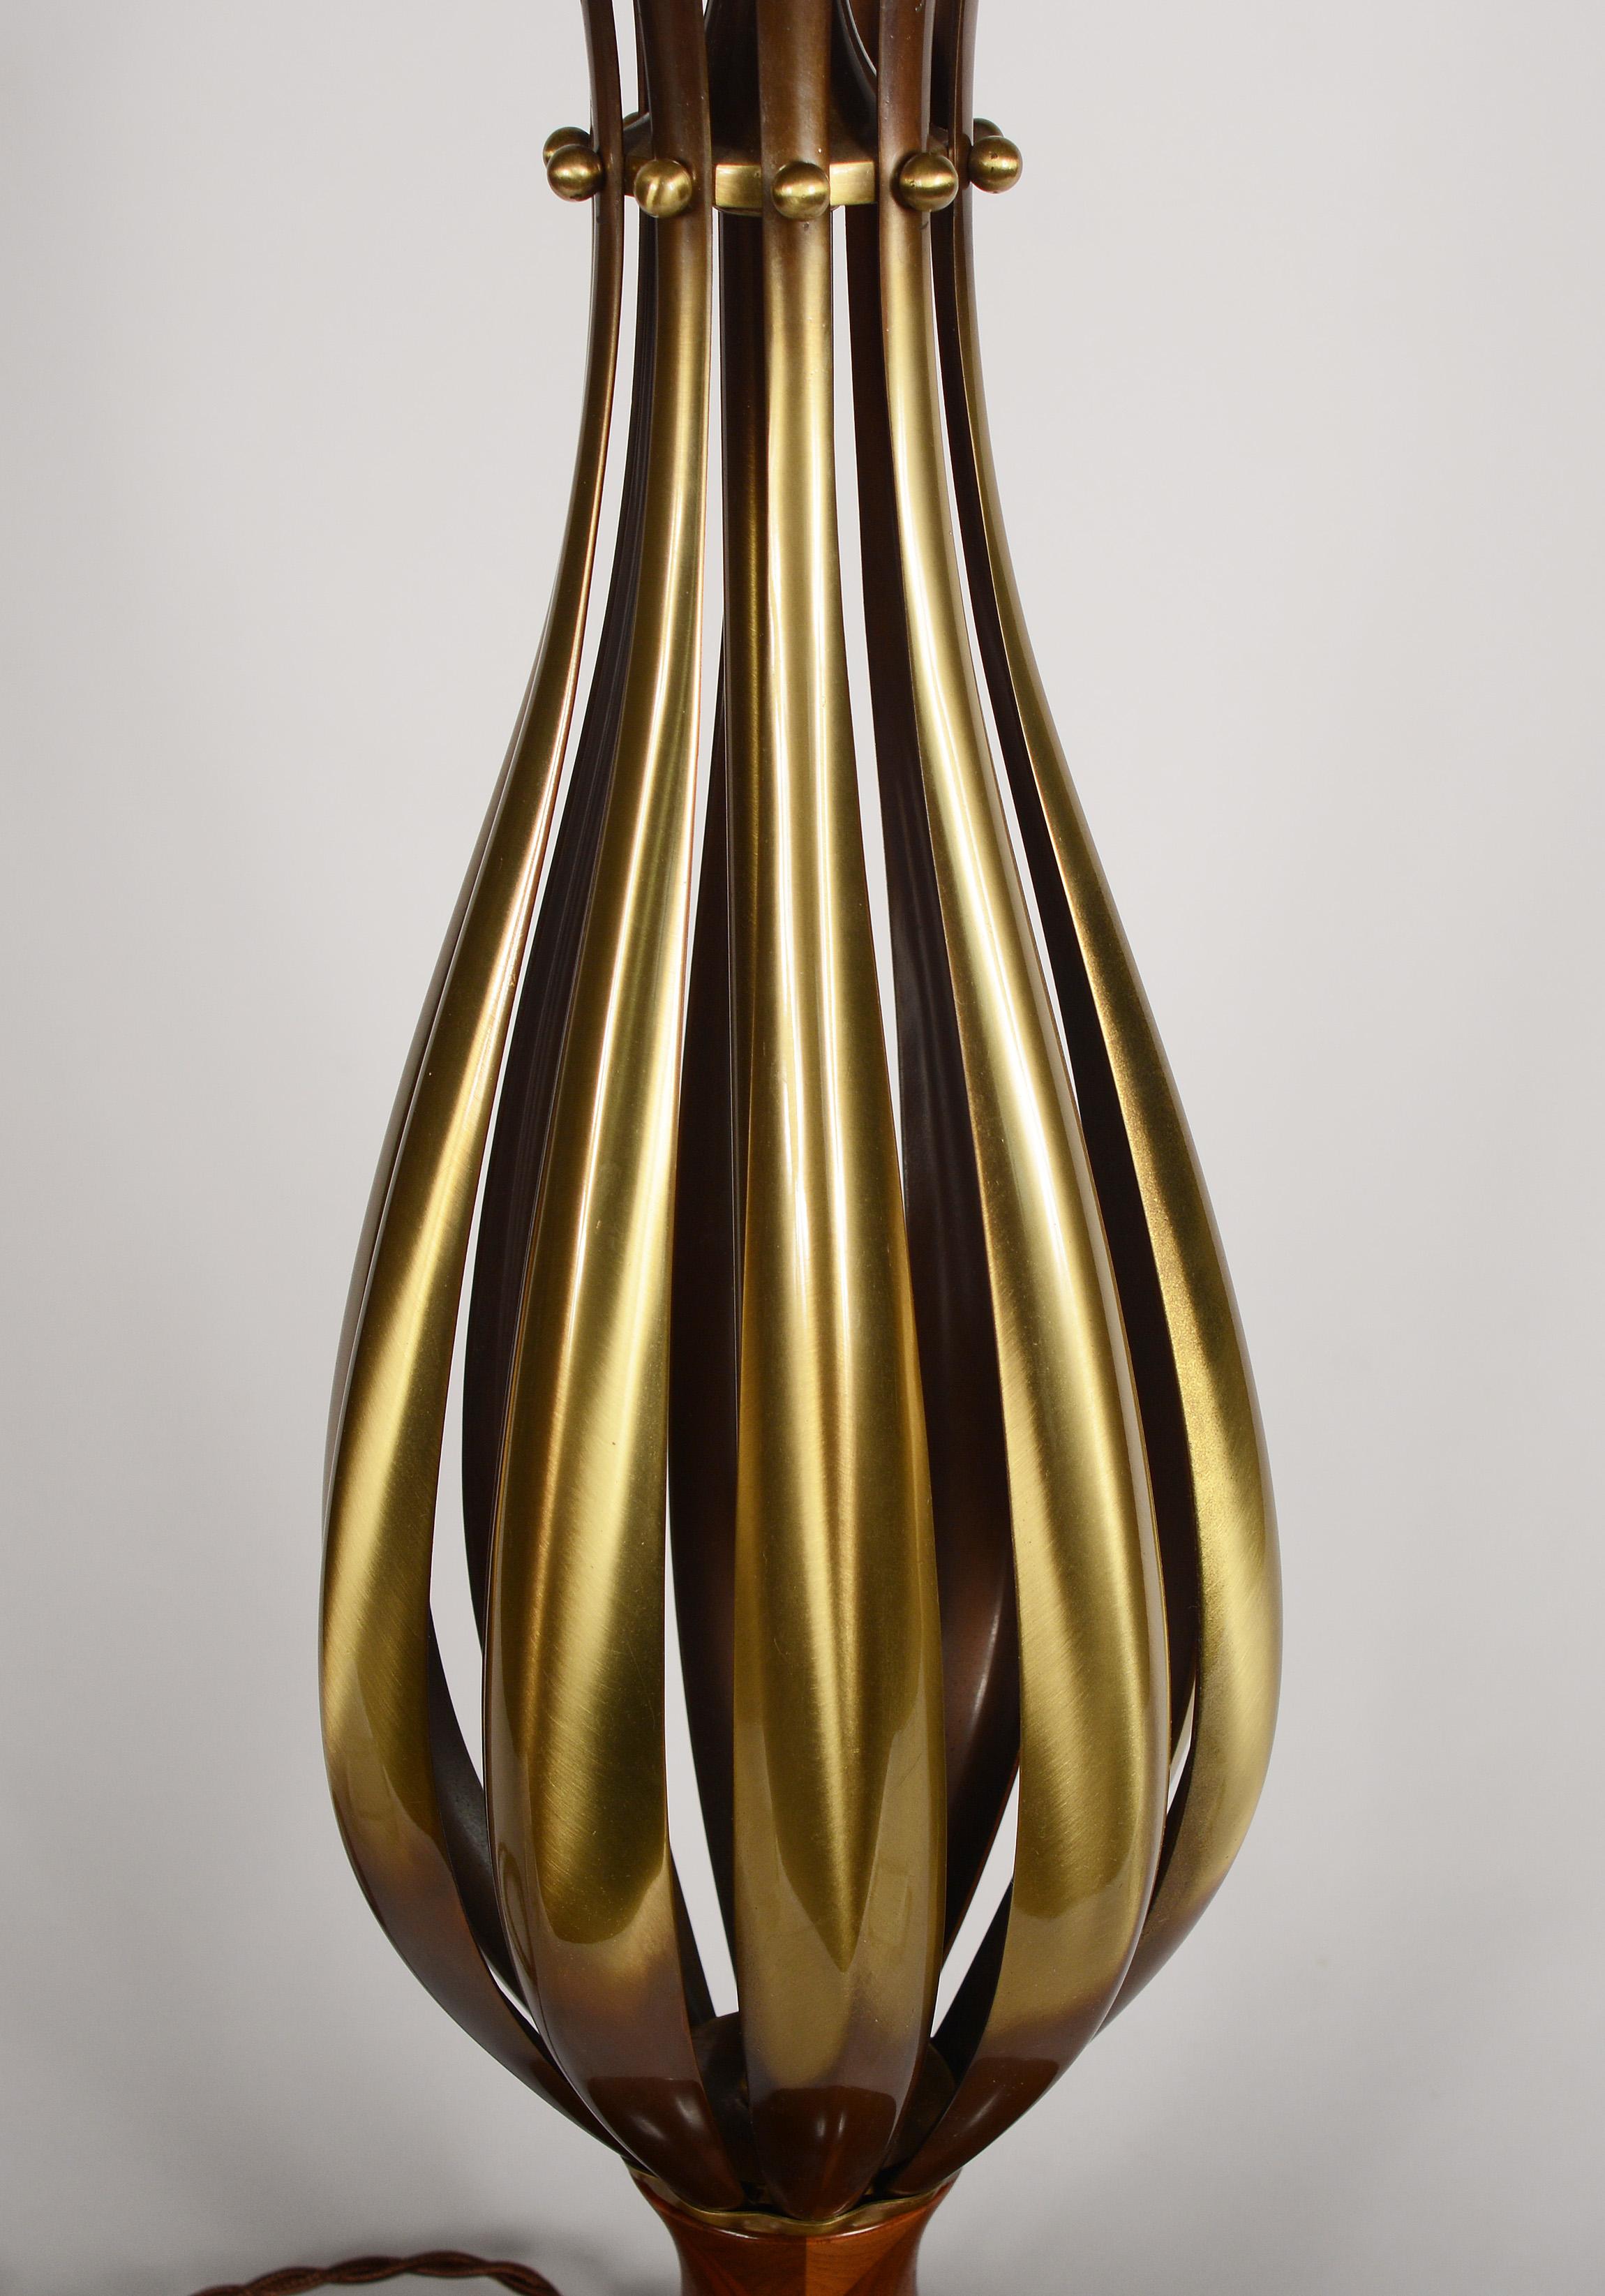 rembrandt brass lamp